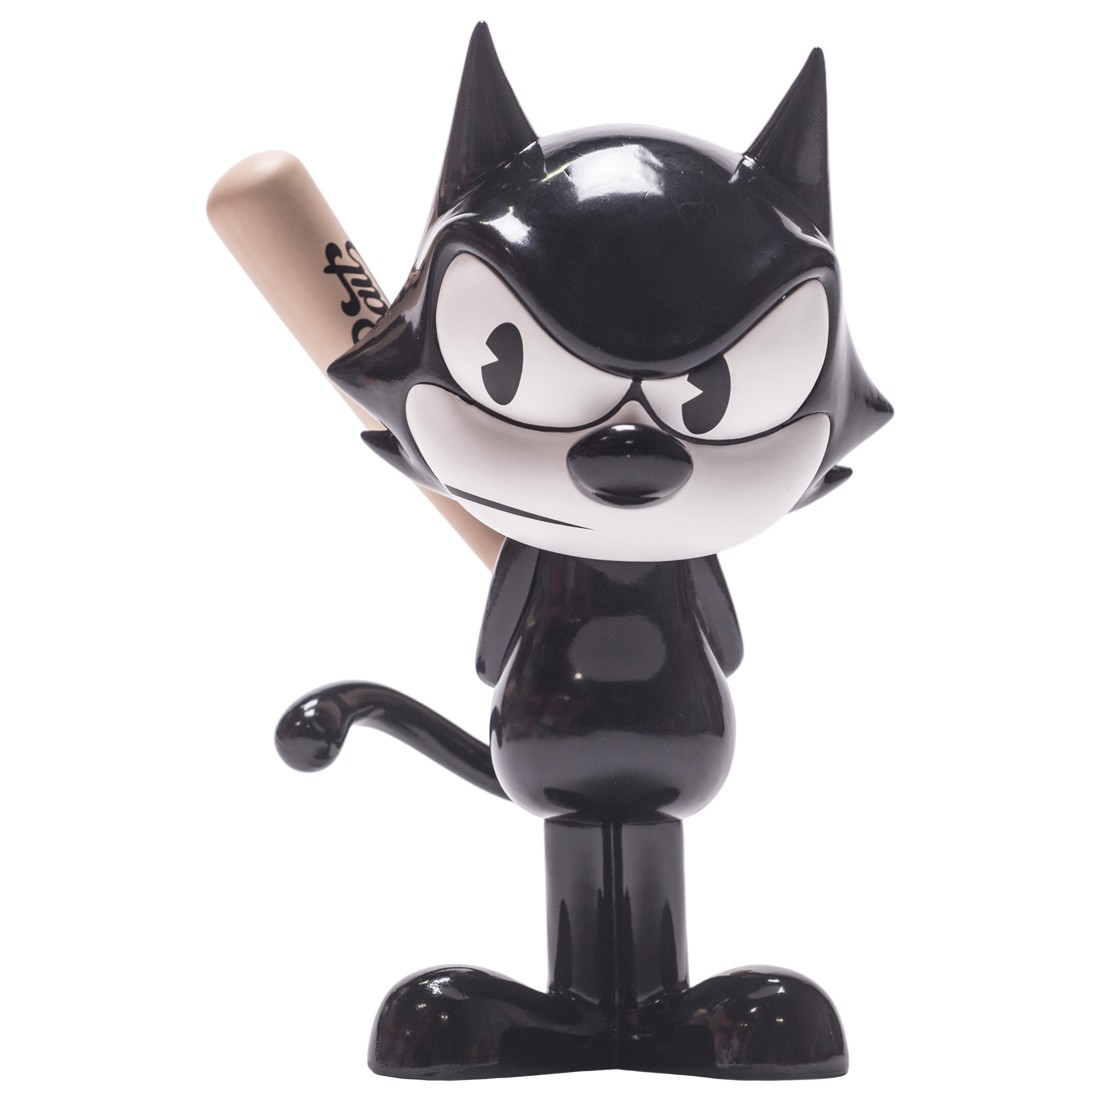 BAIT x Dreamworks x SWITCH Collectibles Felix the Cat Slugger 6 Inch Figure - Glossy Black (black / white)